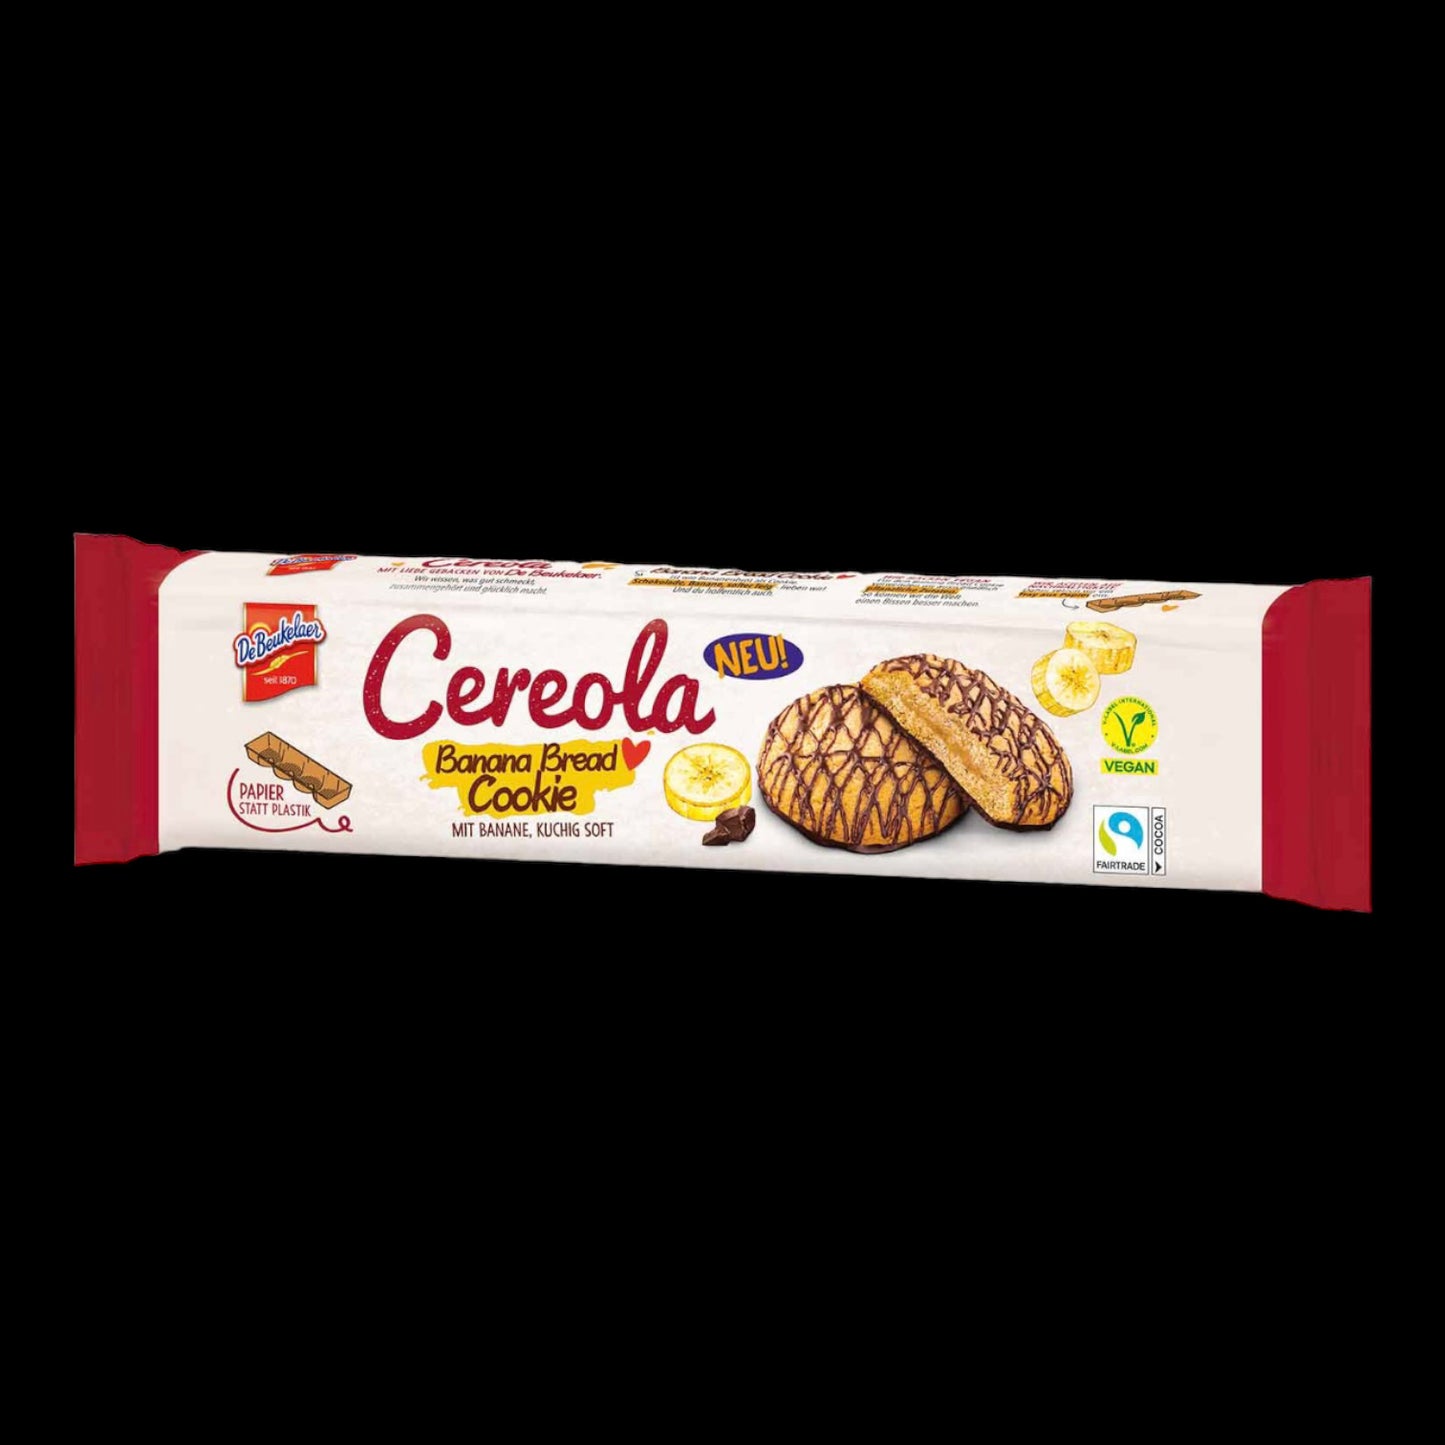 DeBeukelaer Cereola Banana Bread Cookie Vegan 160g